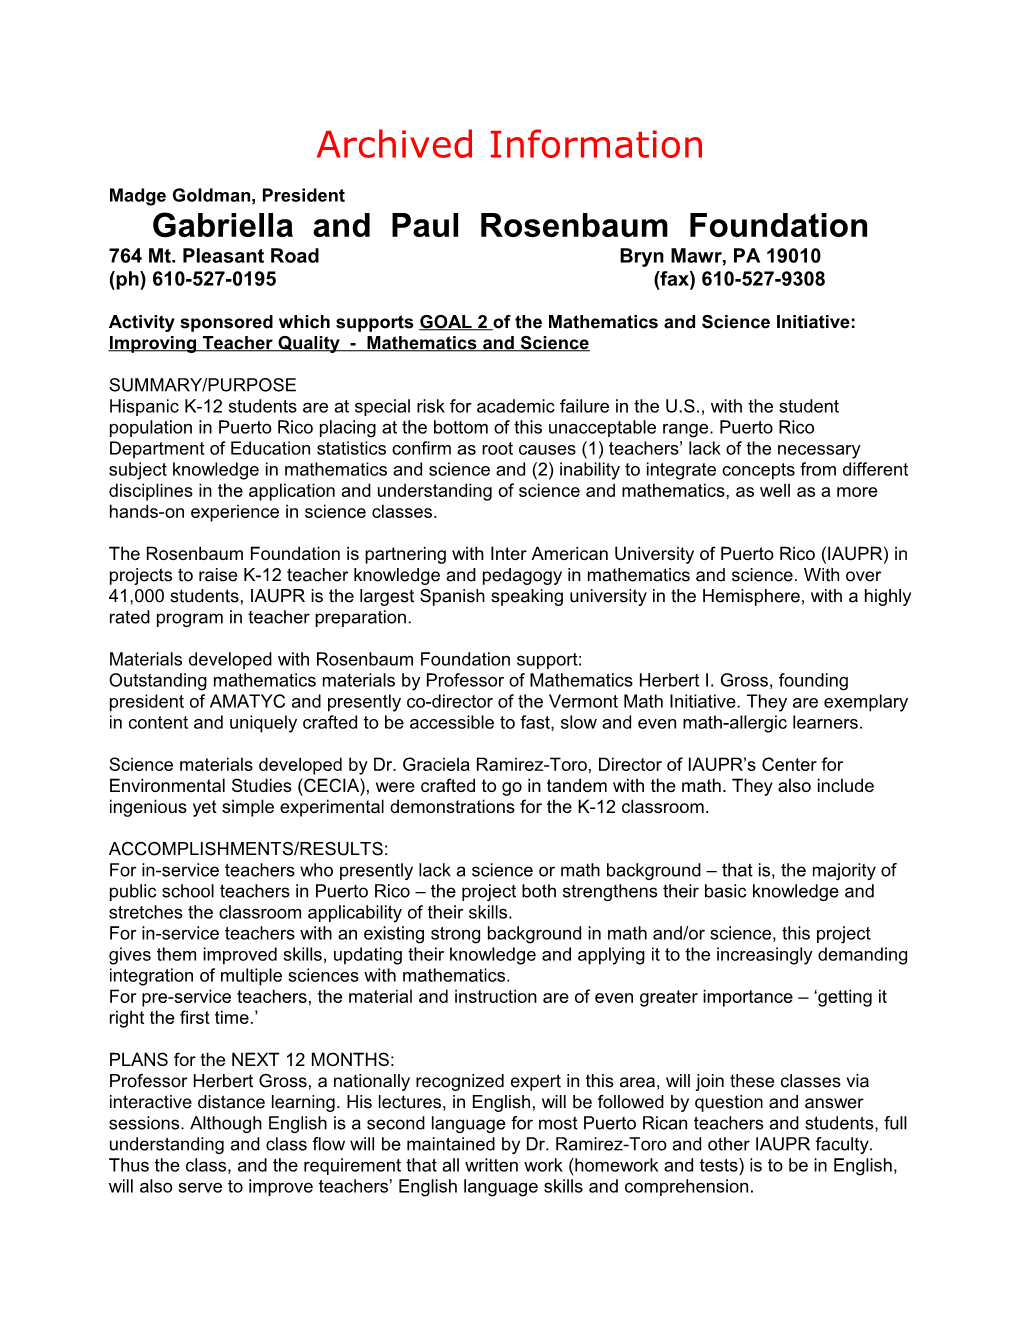 Archived: Gabriella and Paul Rosenbaum Foundation